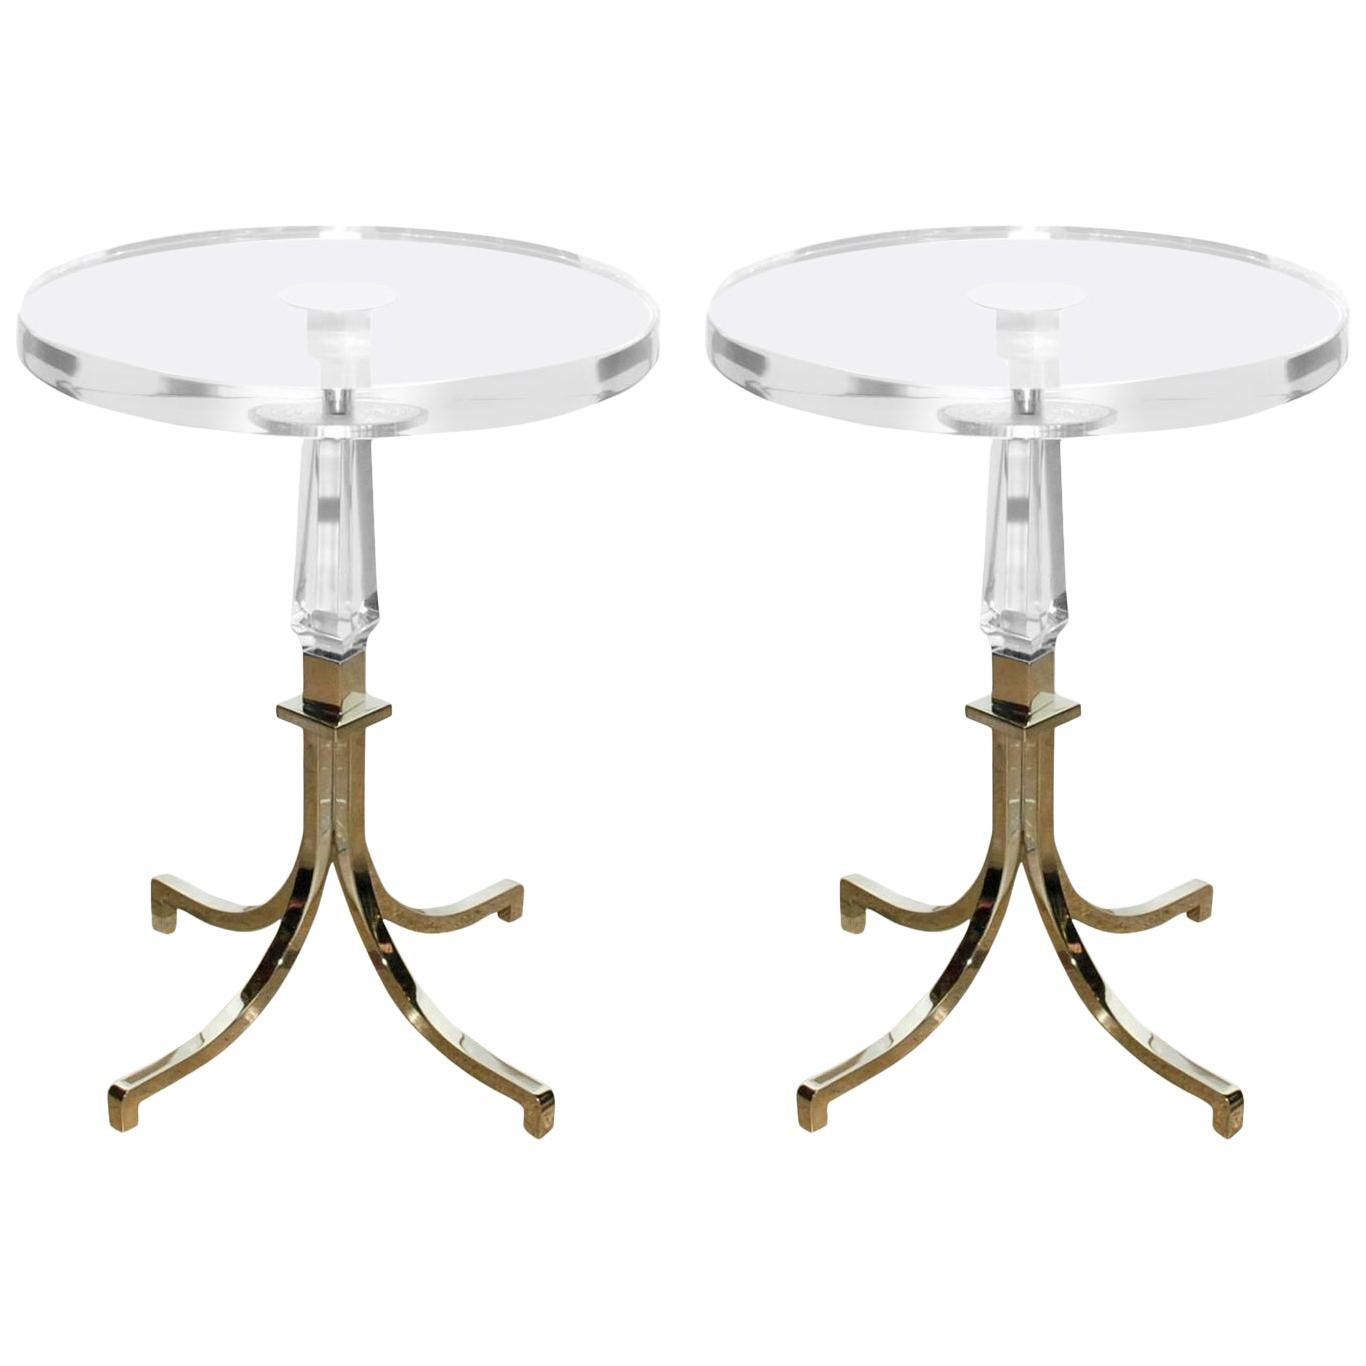 Pair of Regency Style Lucite and Nickel Side Tables by Charles Hollis Jones